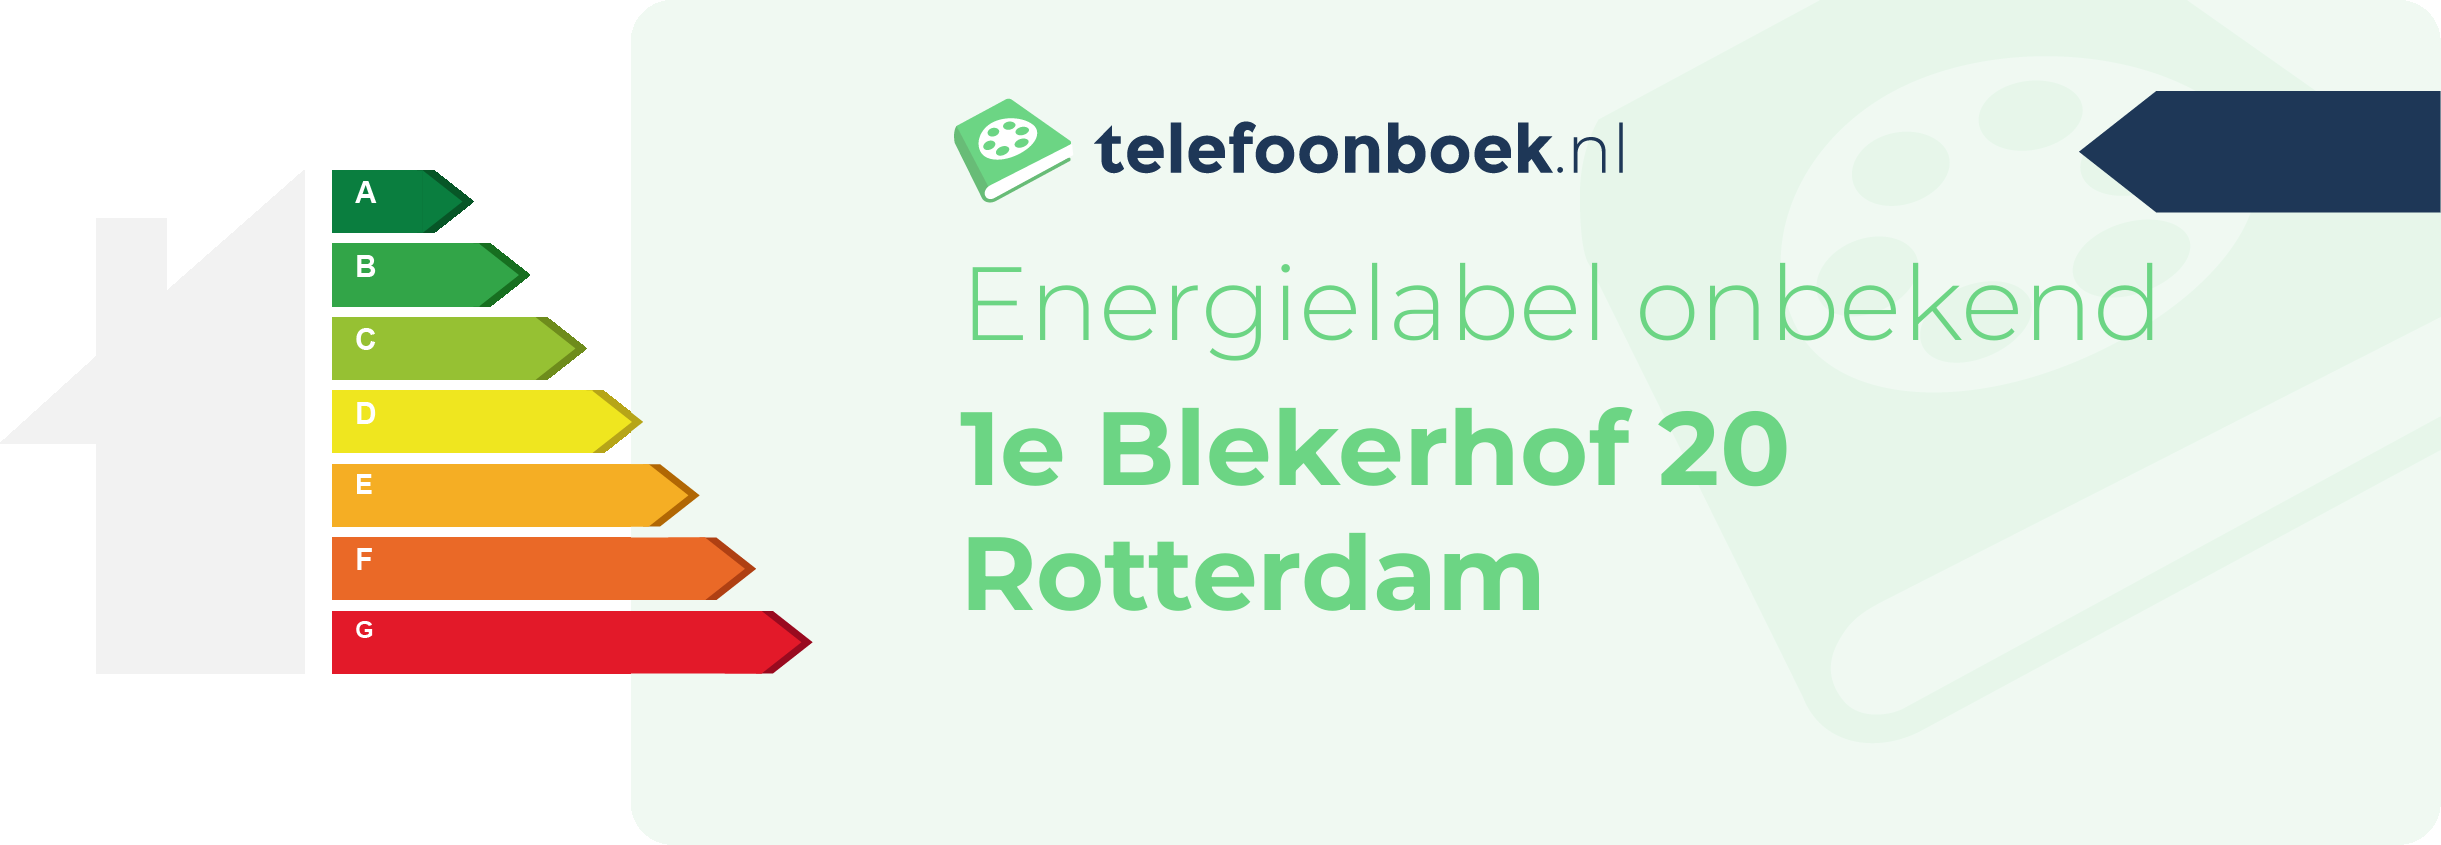 Energielabel 1e Blekerhof 20 Rotterdam